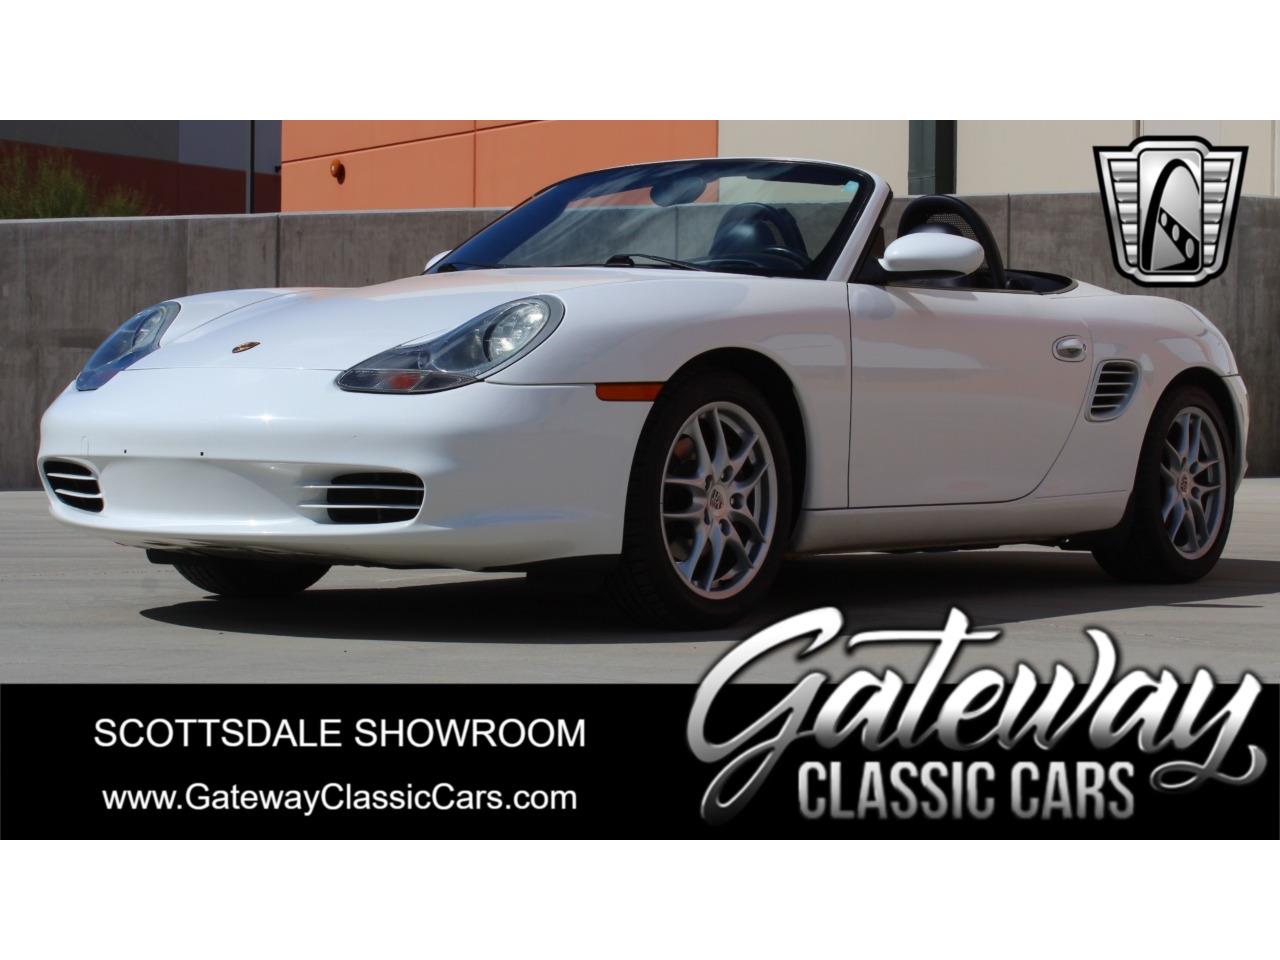 For Sale: 2003 Porsche Boxster in O'Fallon, Illinois for sale in O Fallon, IL